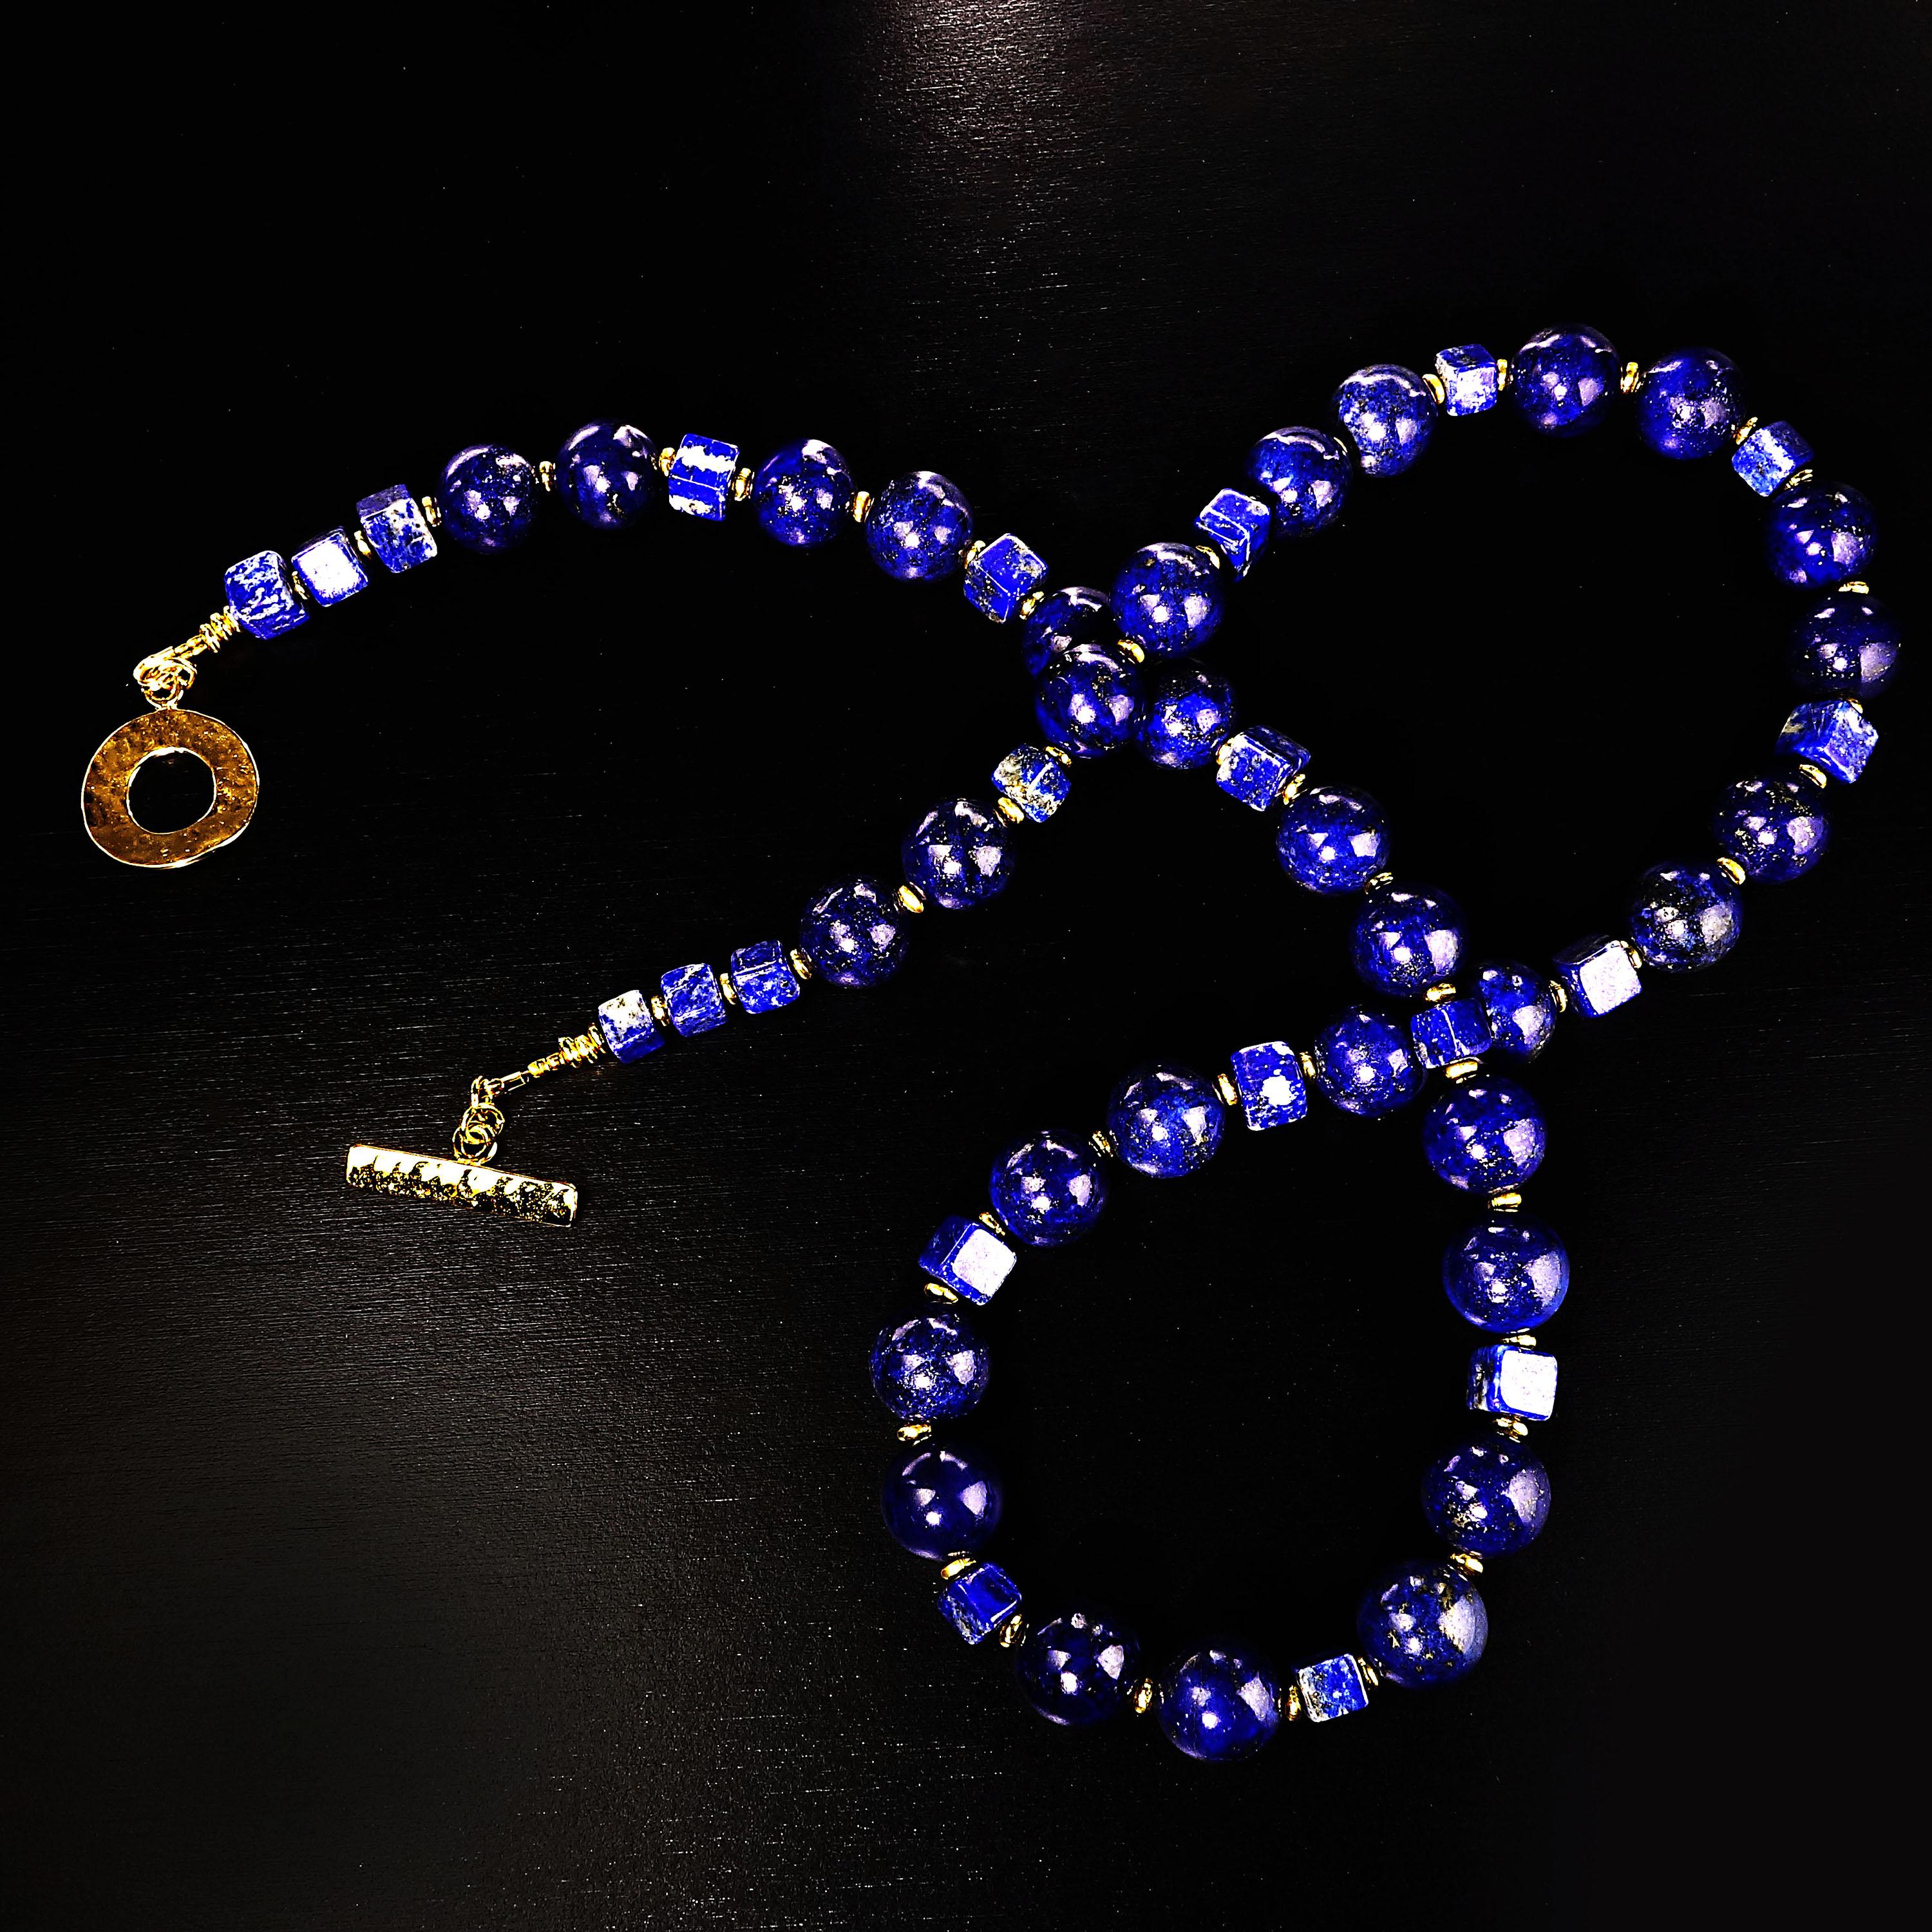 Gemjunky Glowing Blue Lapis Lazuli Necklace 1